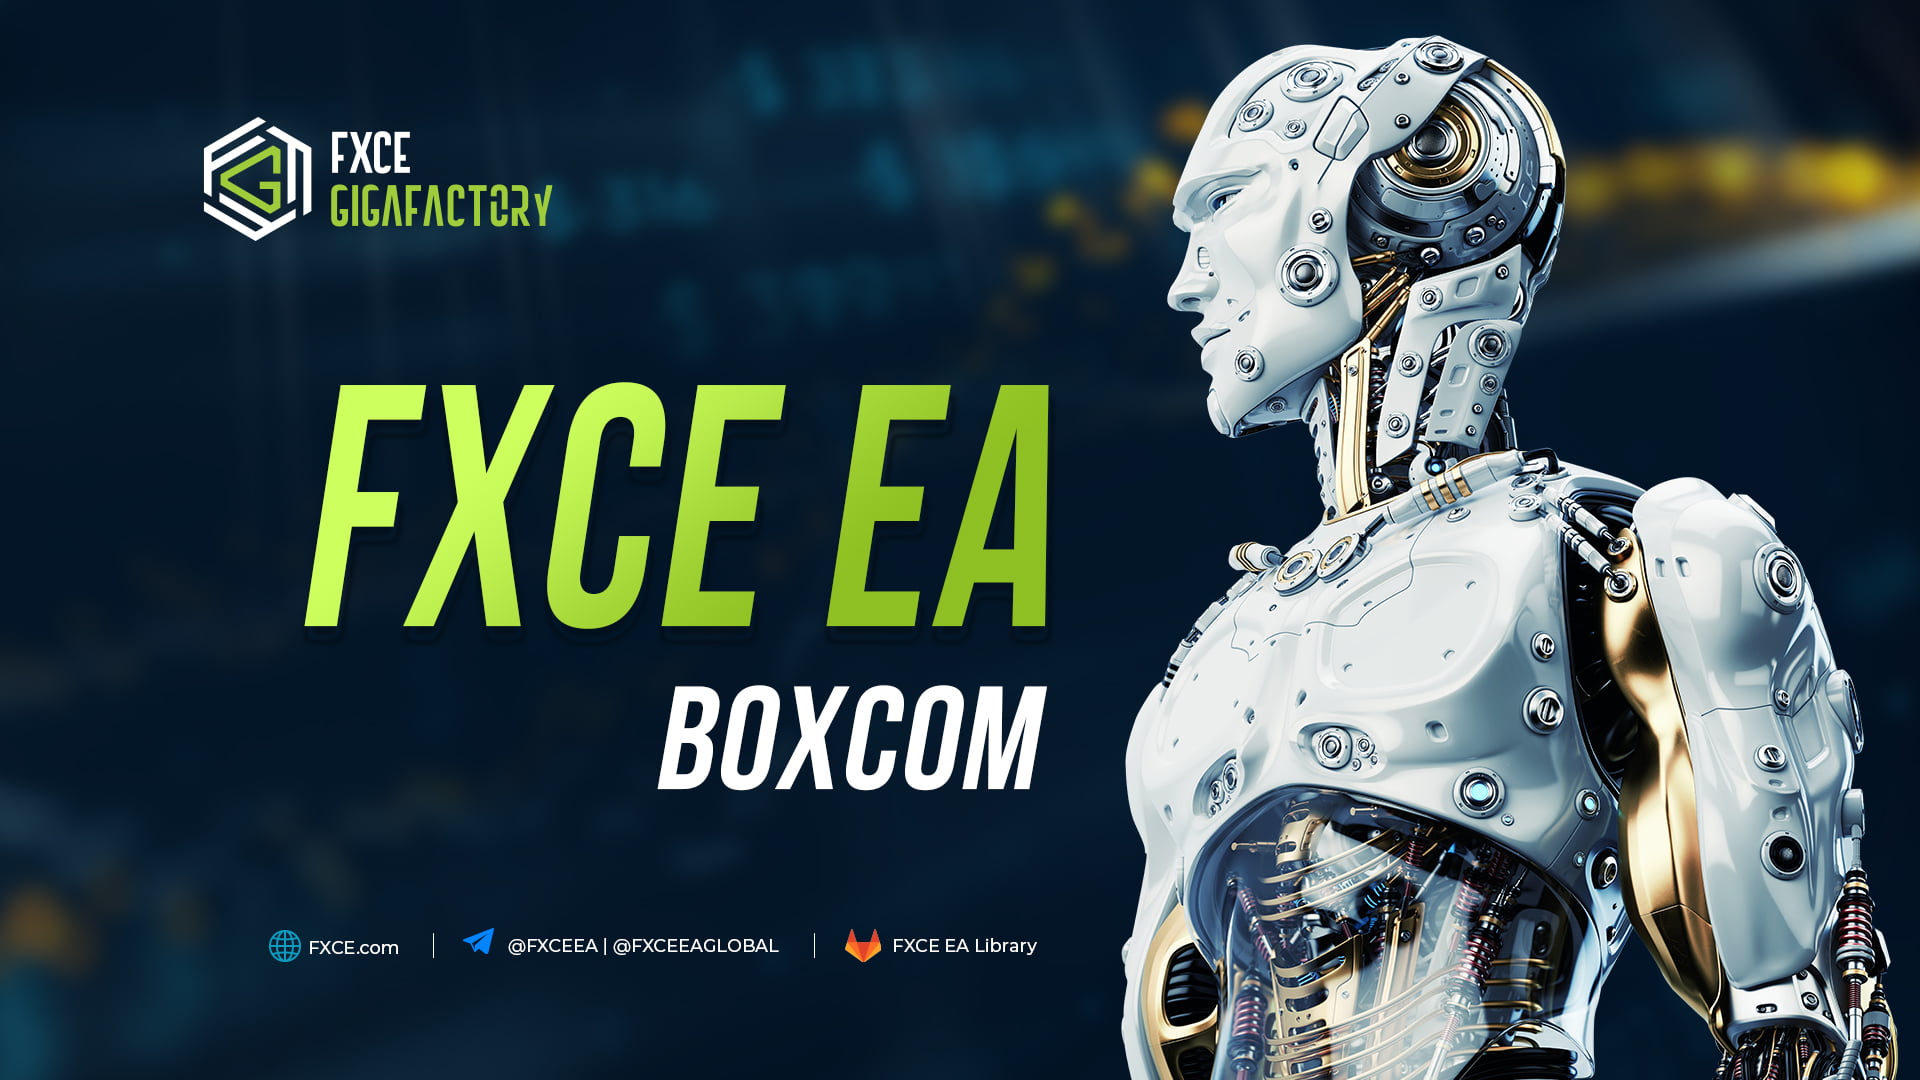 FXCE EA BOXCOM